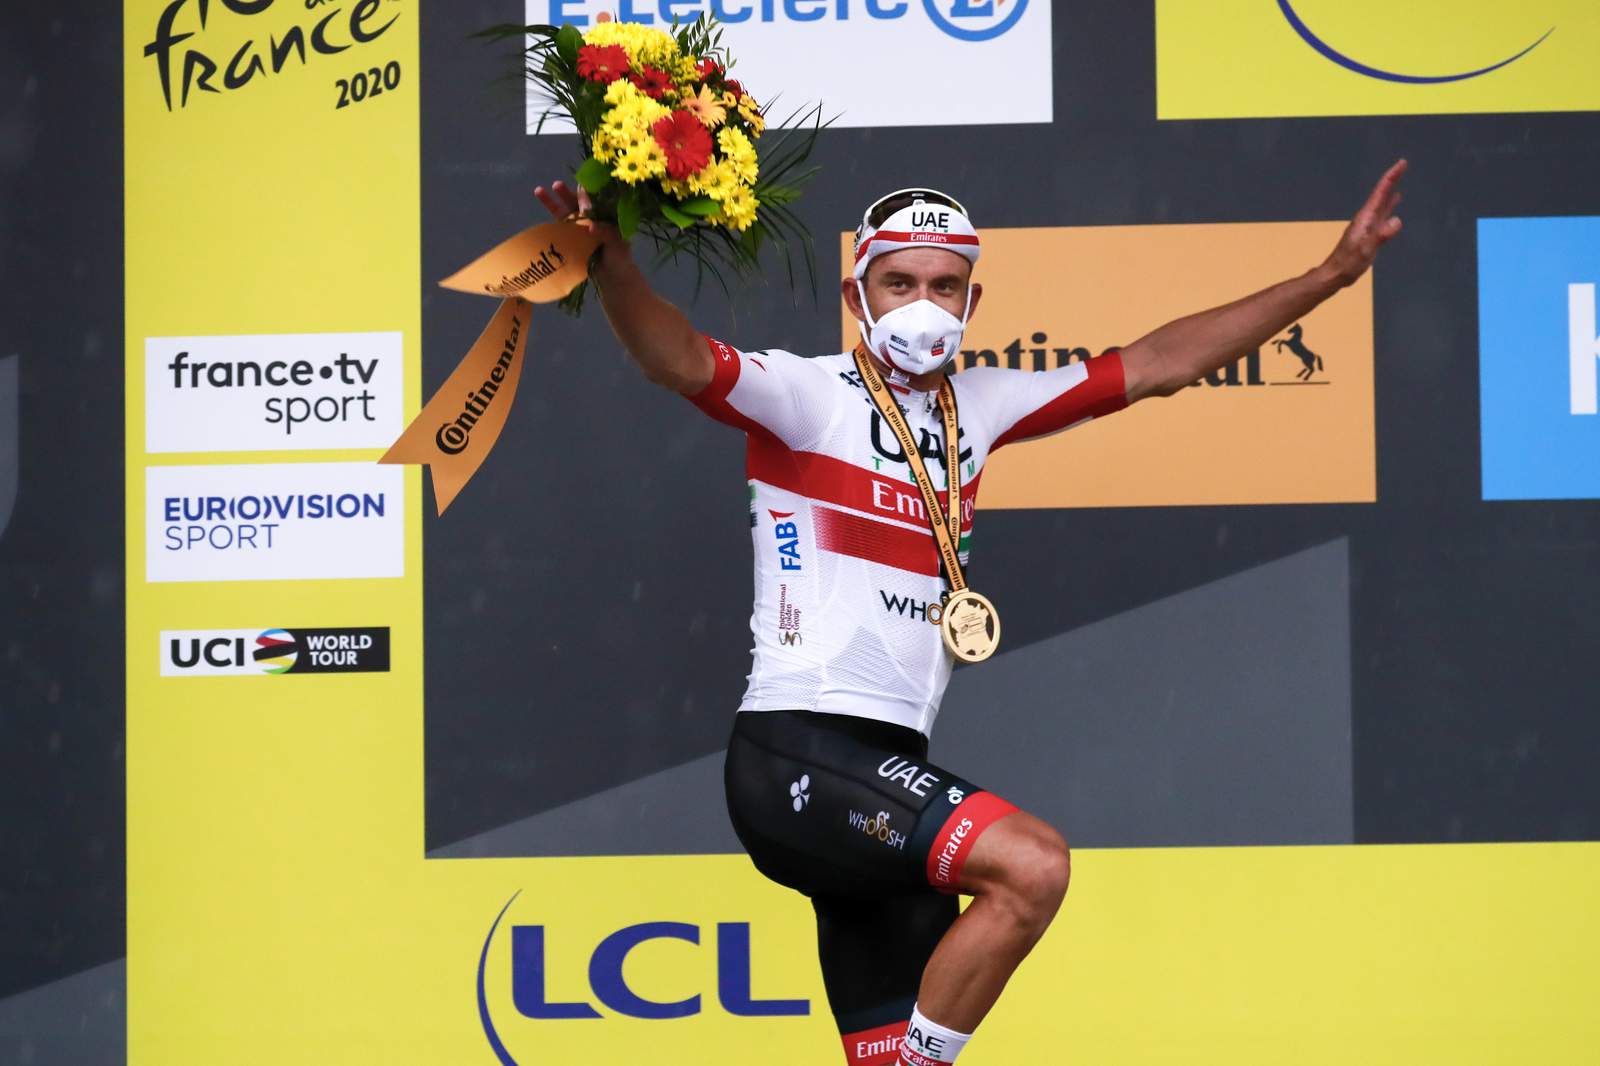 Late but still going: The strangest Tour de France sets off